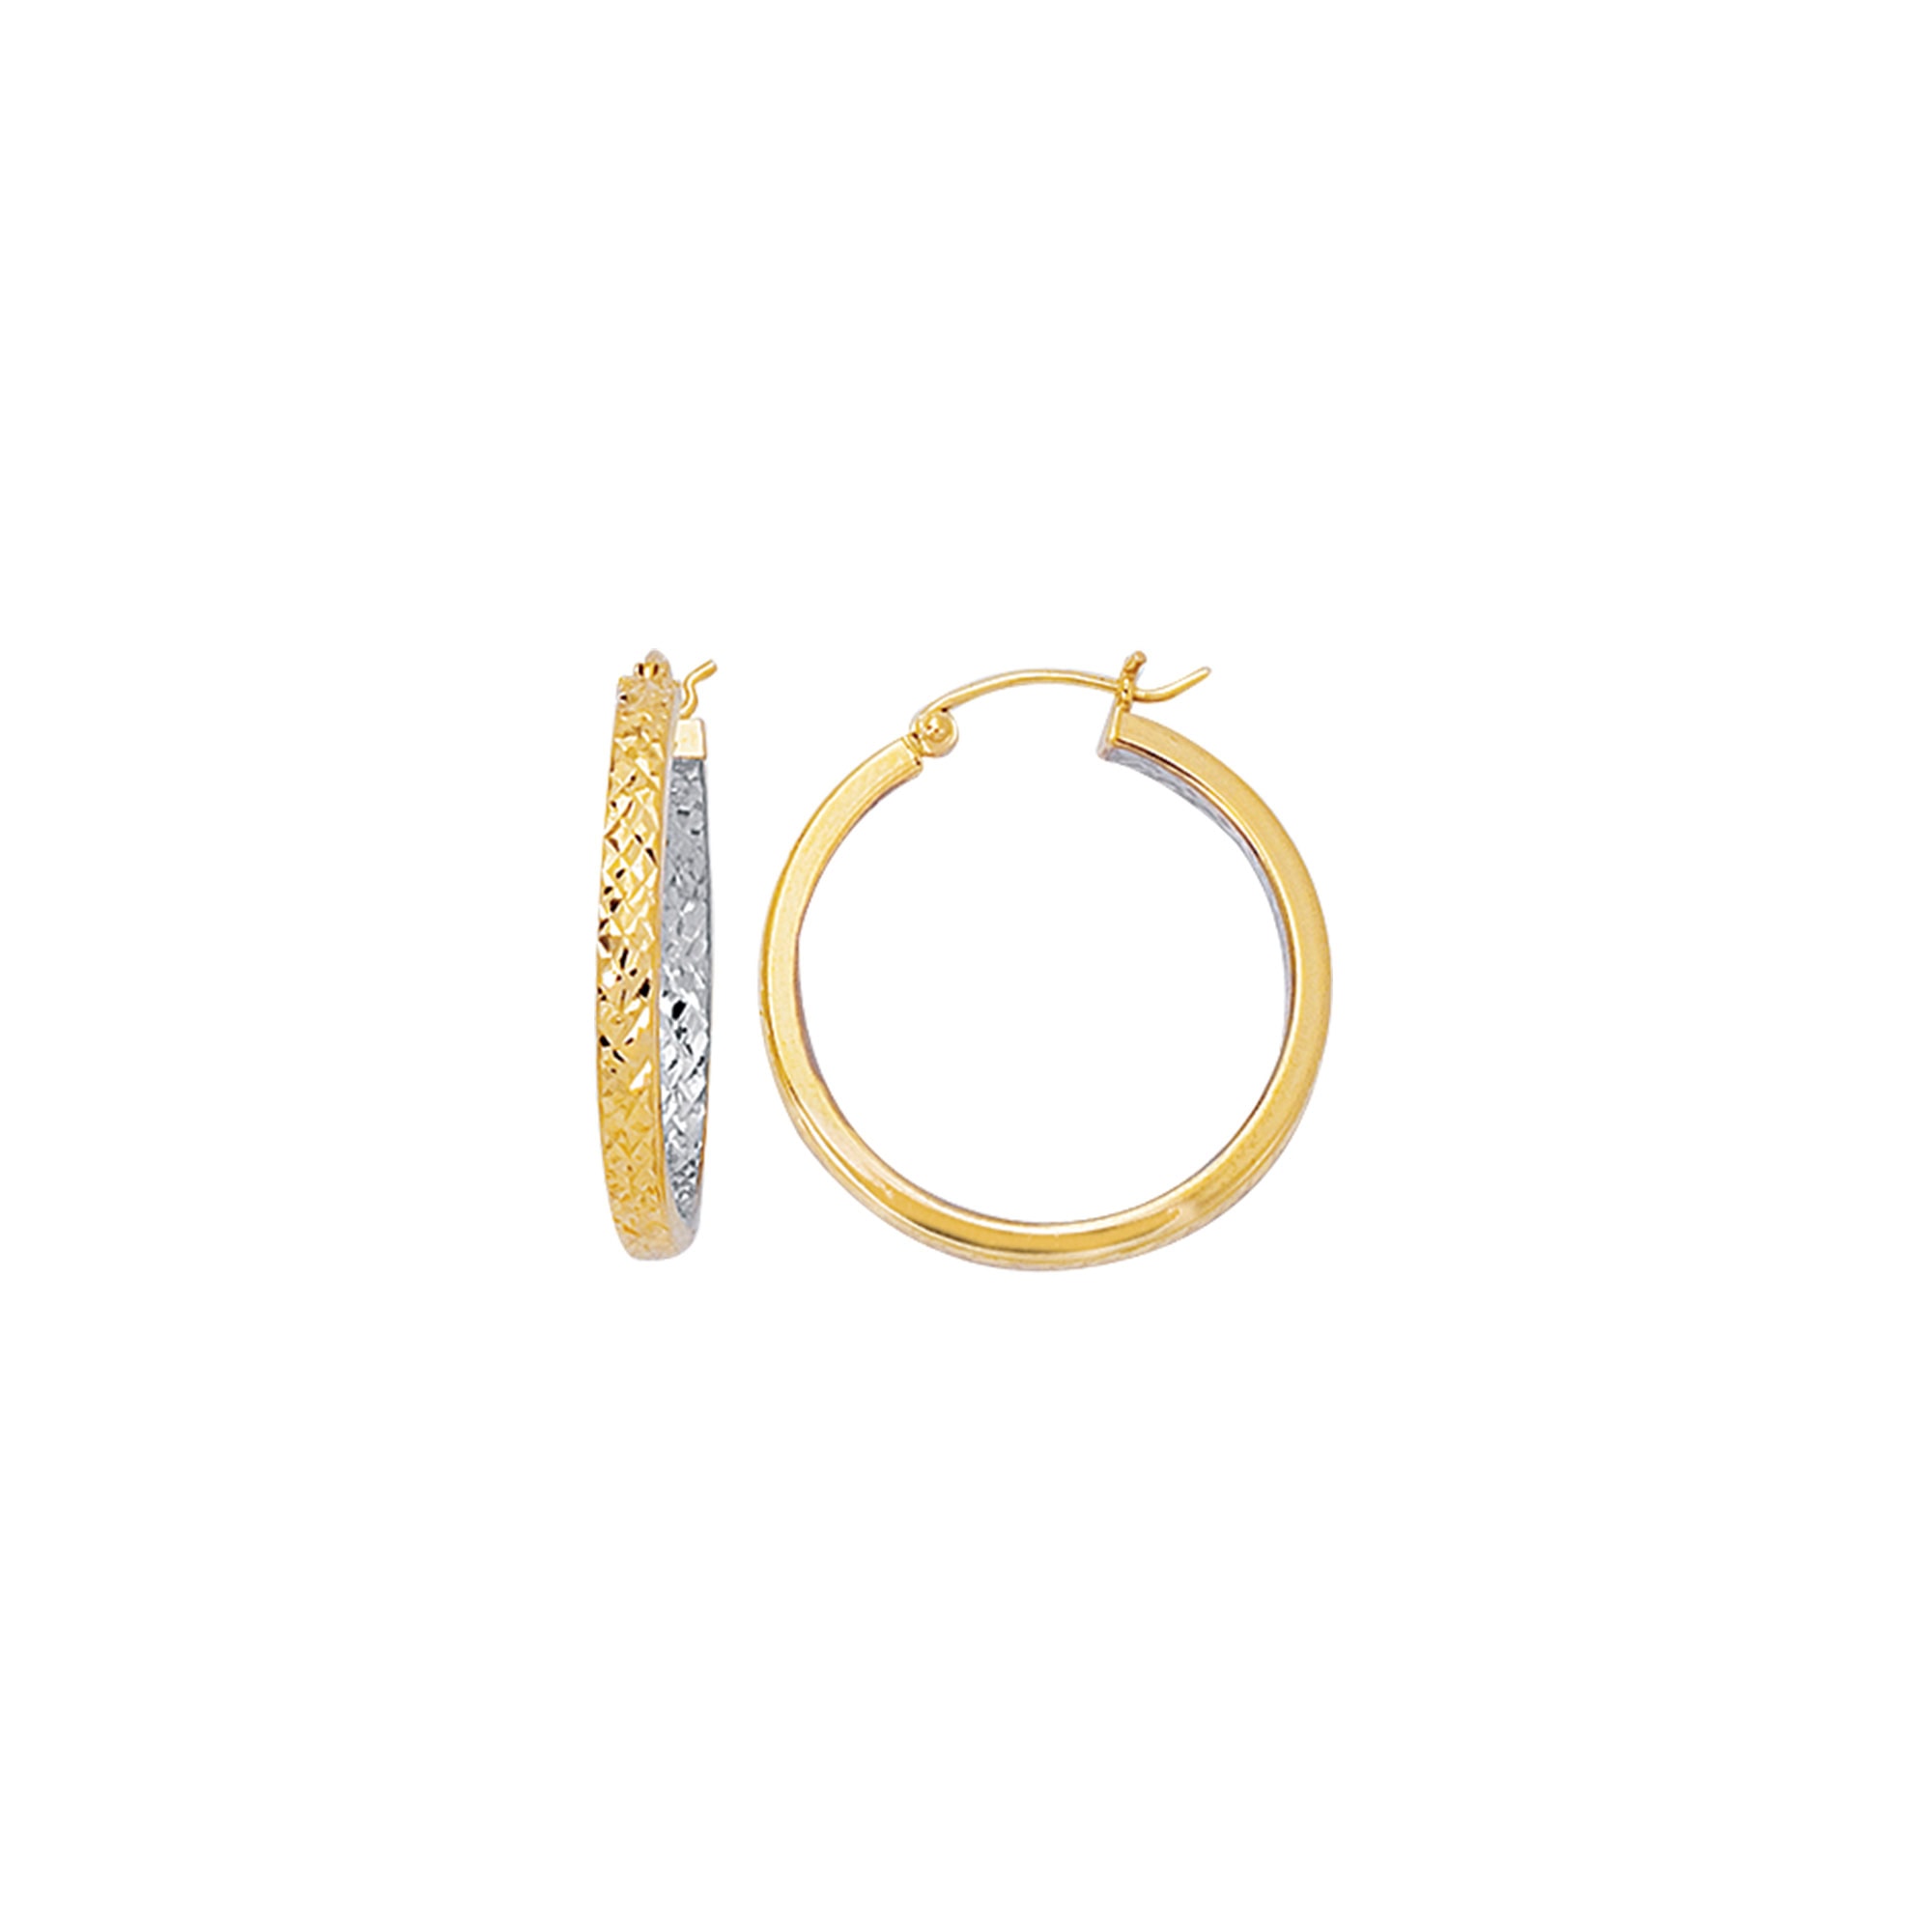 10K Gold Yellow Exterior, White Interior Diamond Cut Hoop Earring